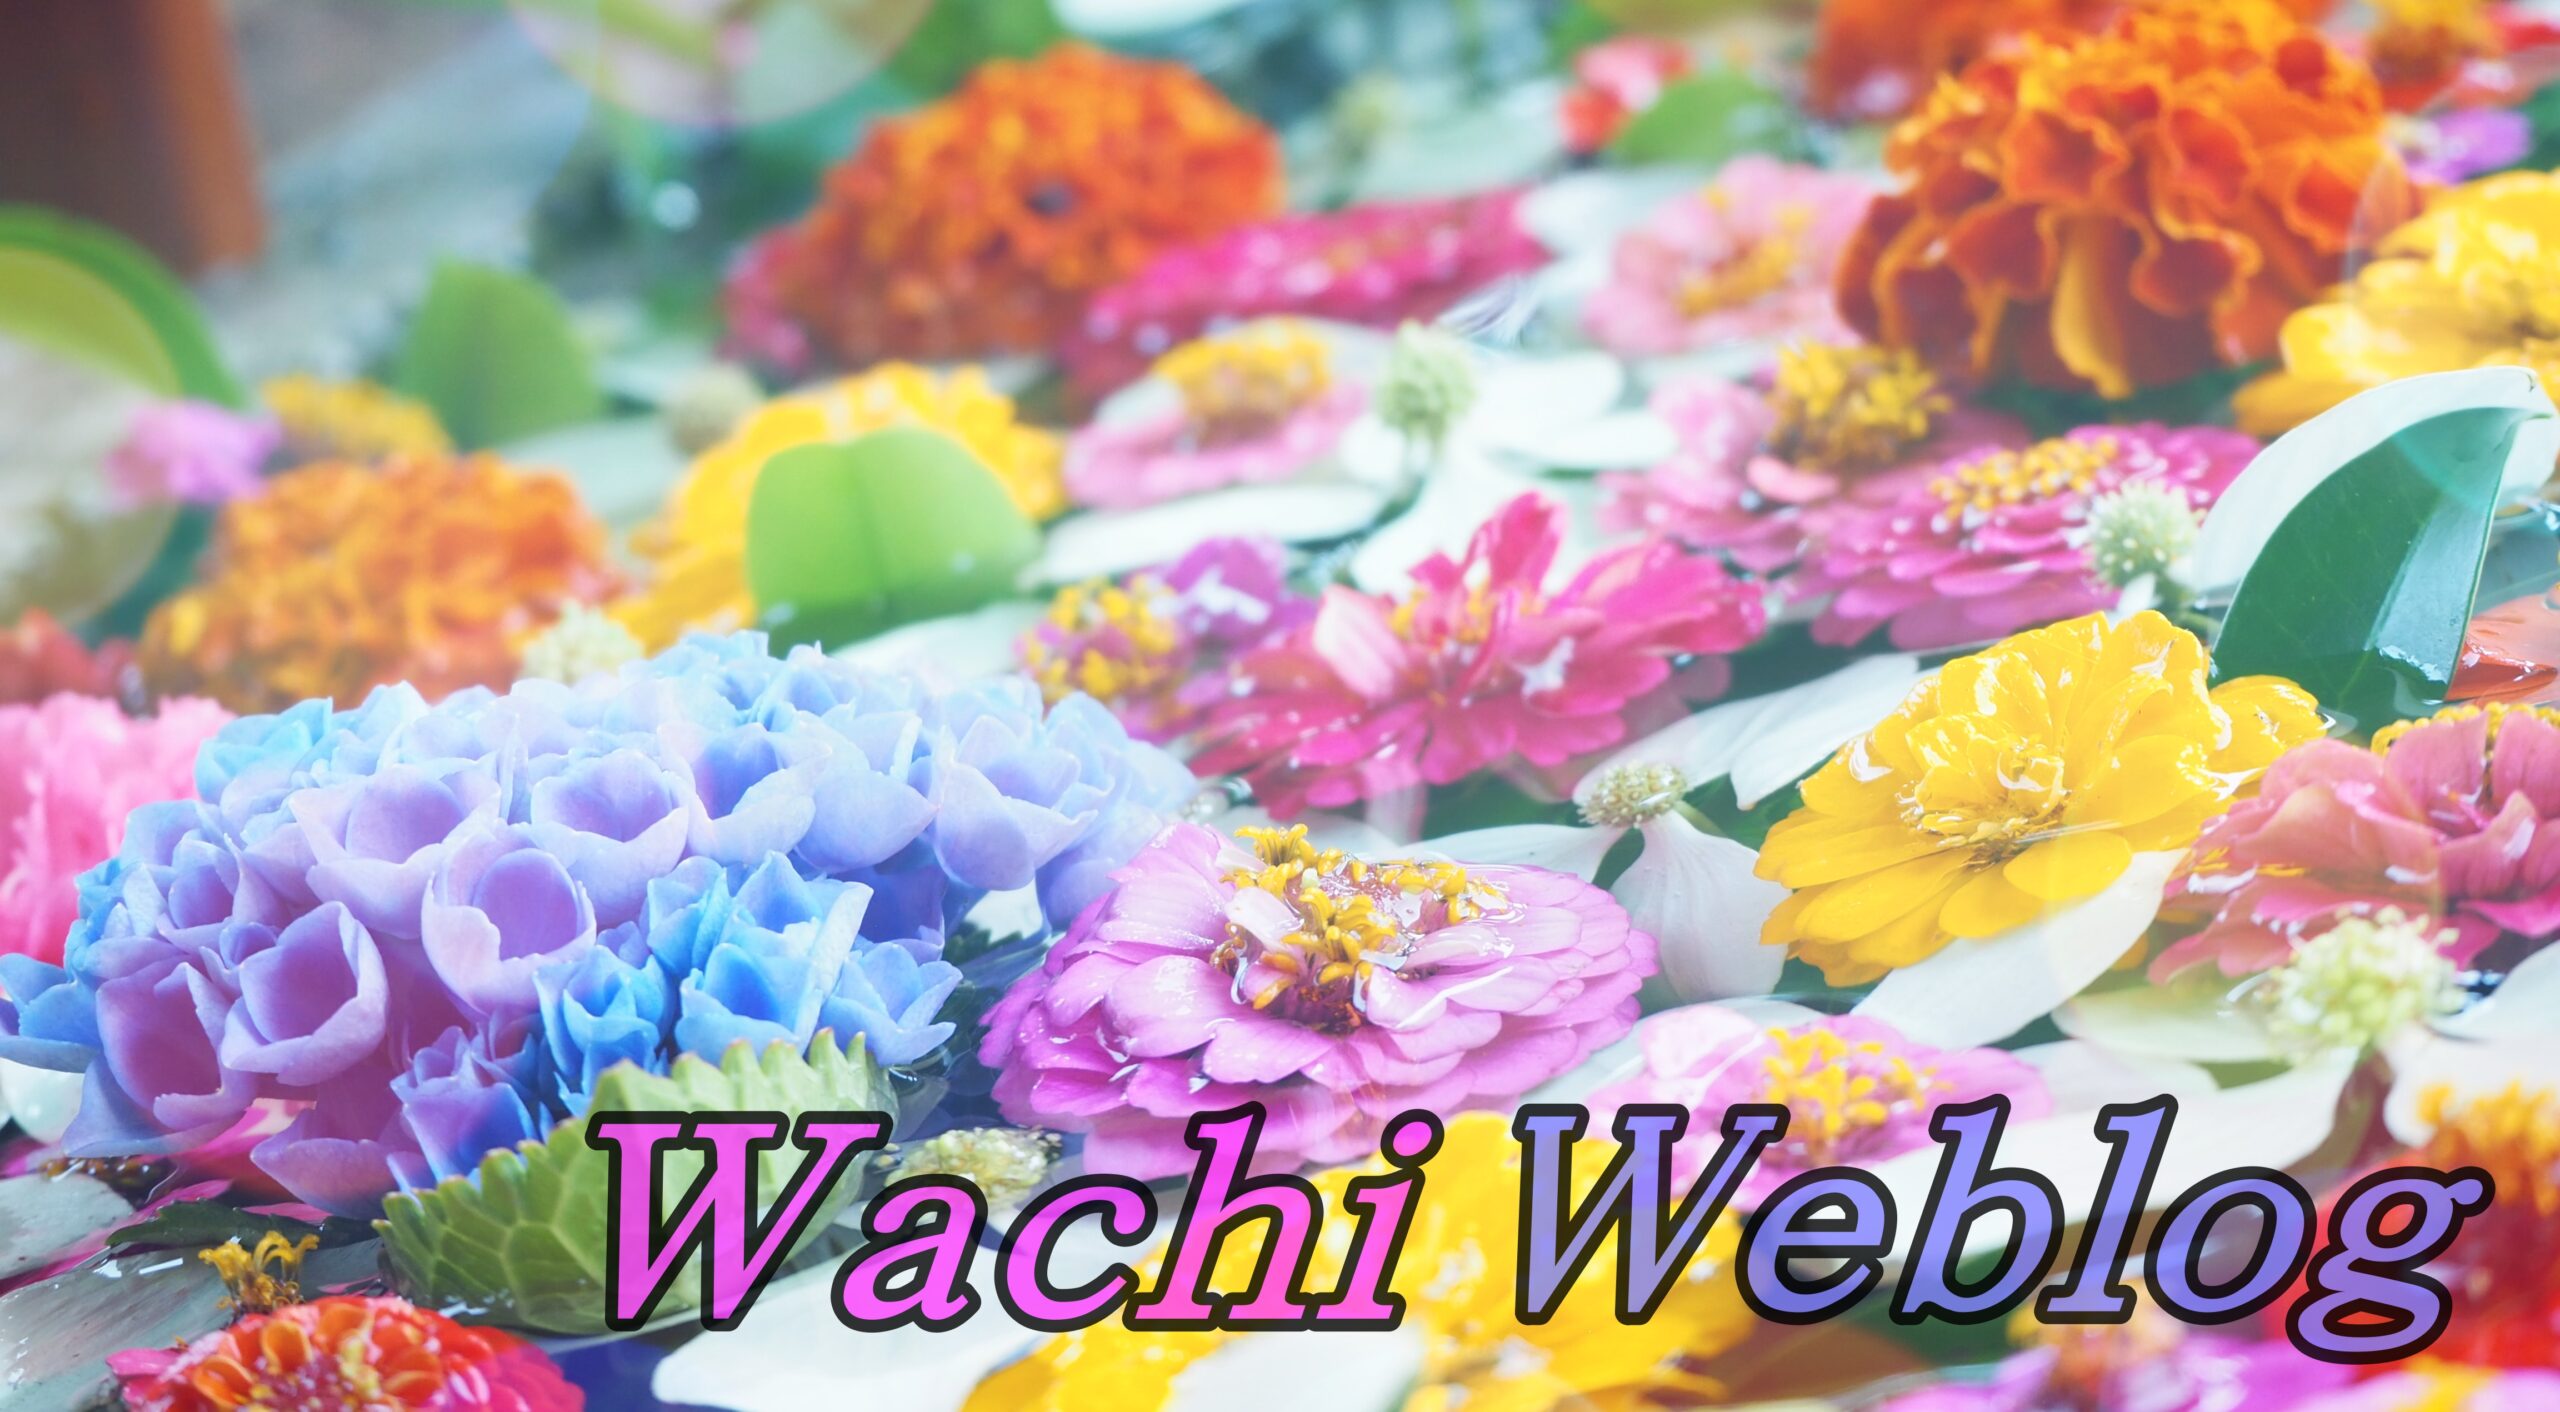 wachiweblog